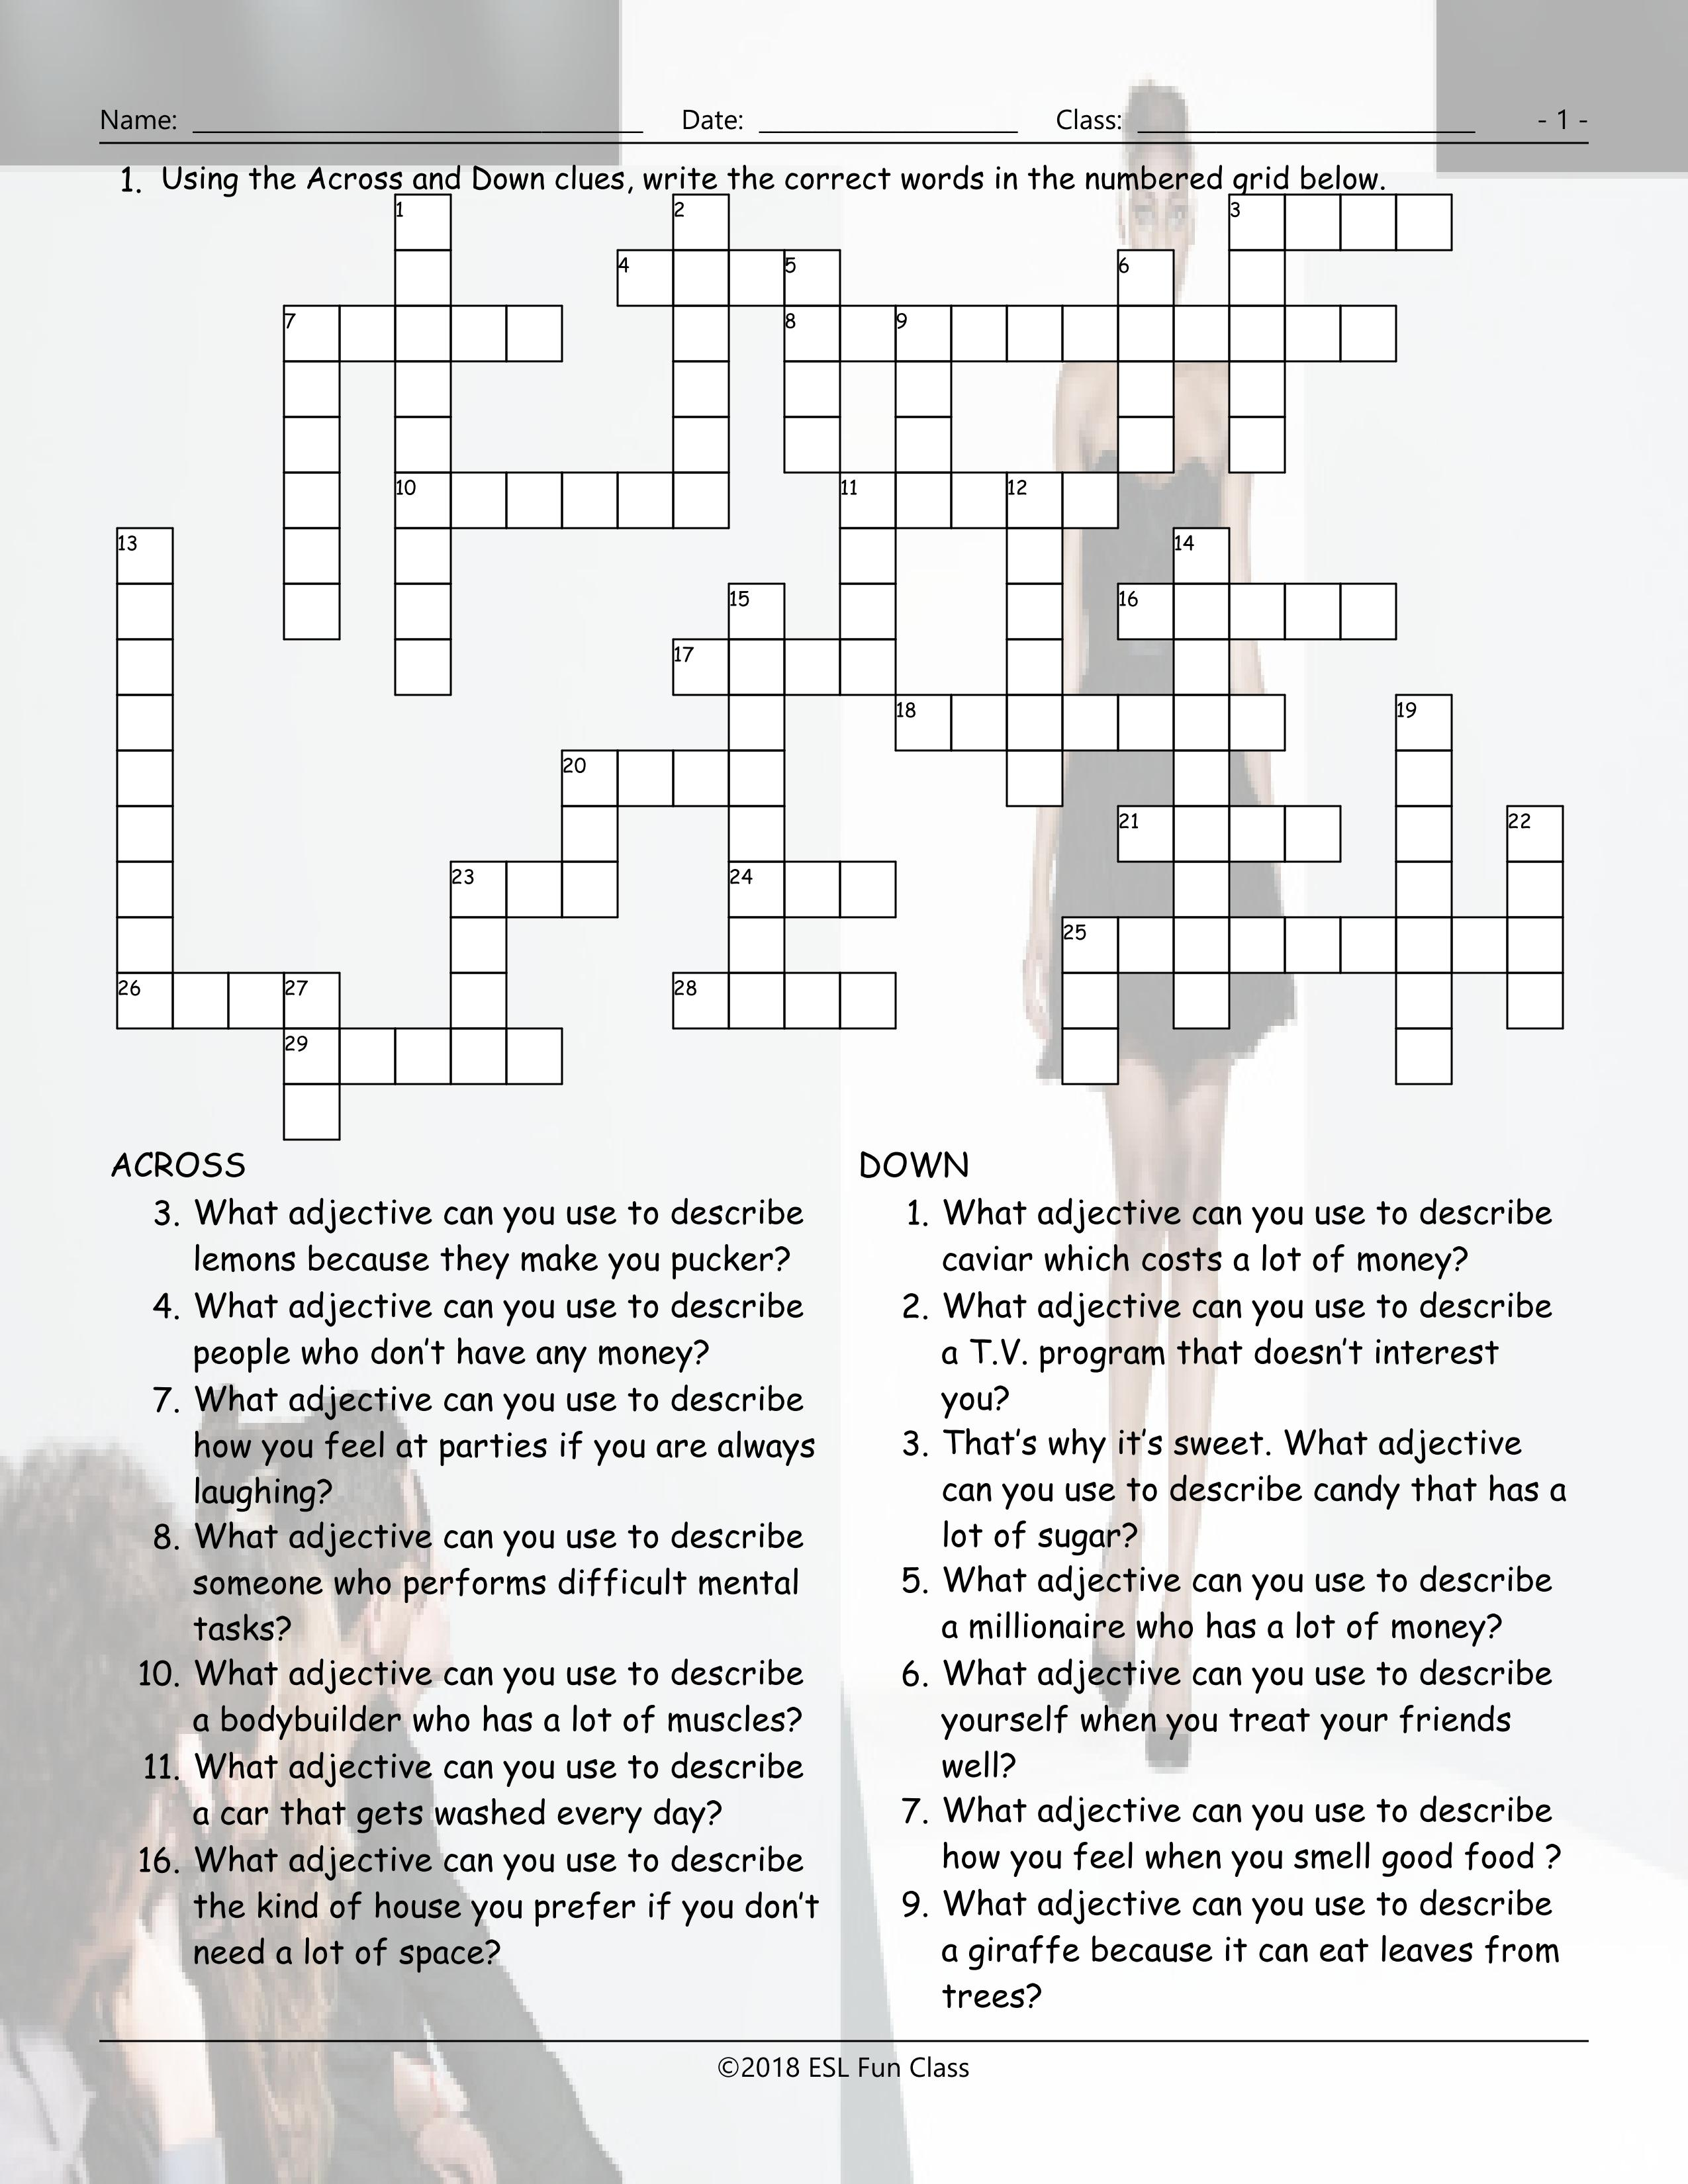 Adjectives Crossword Puzzle-Esl Fun Games-Have Fun! - Adjectives Crossword Puzzle Printable